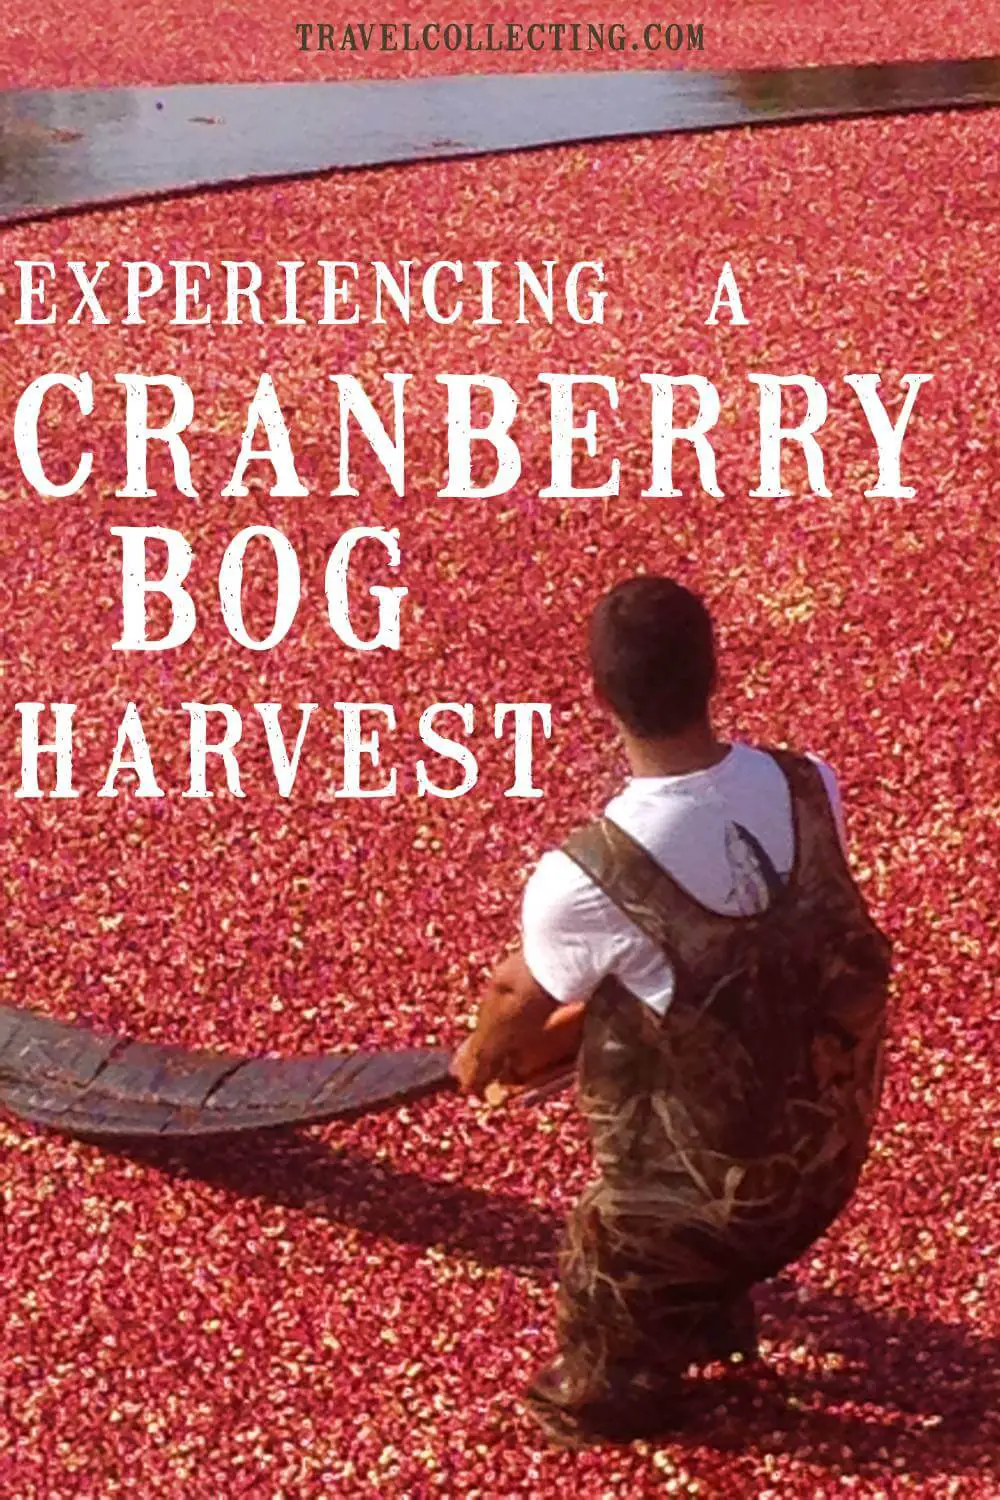 Cranberry bog experience